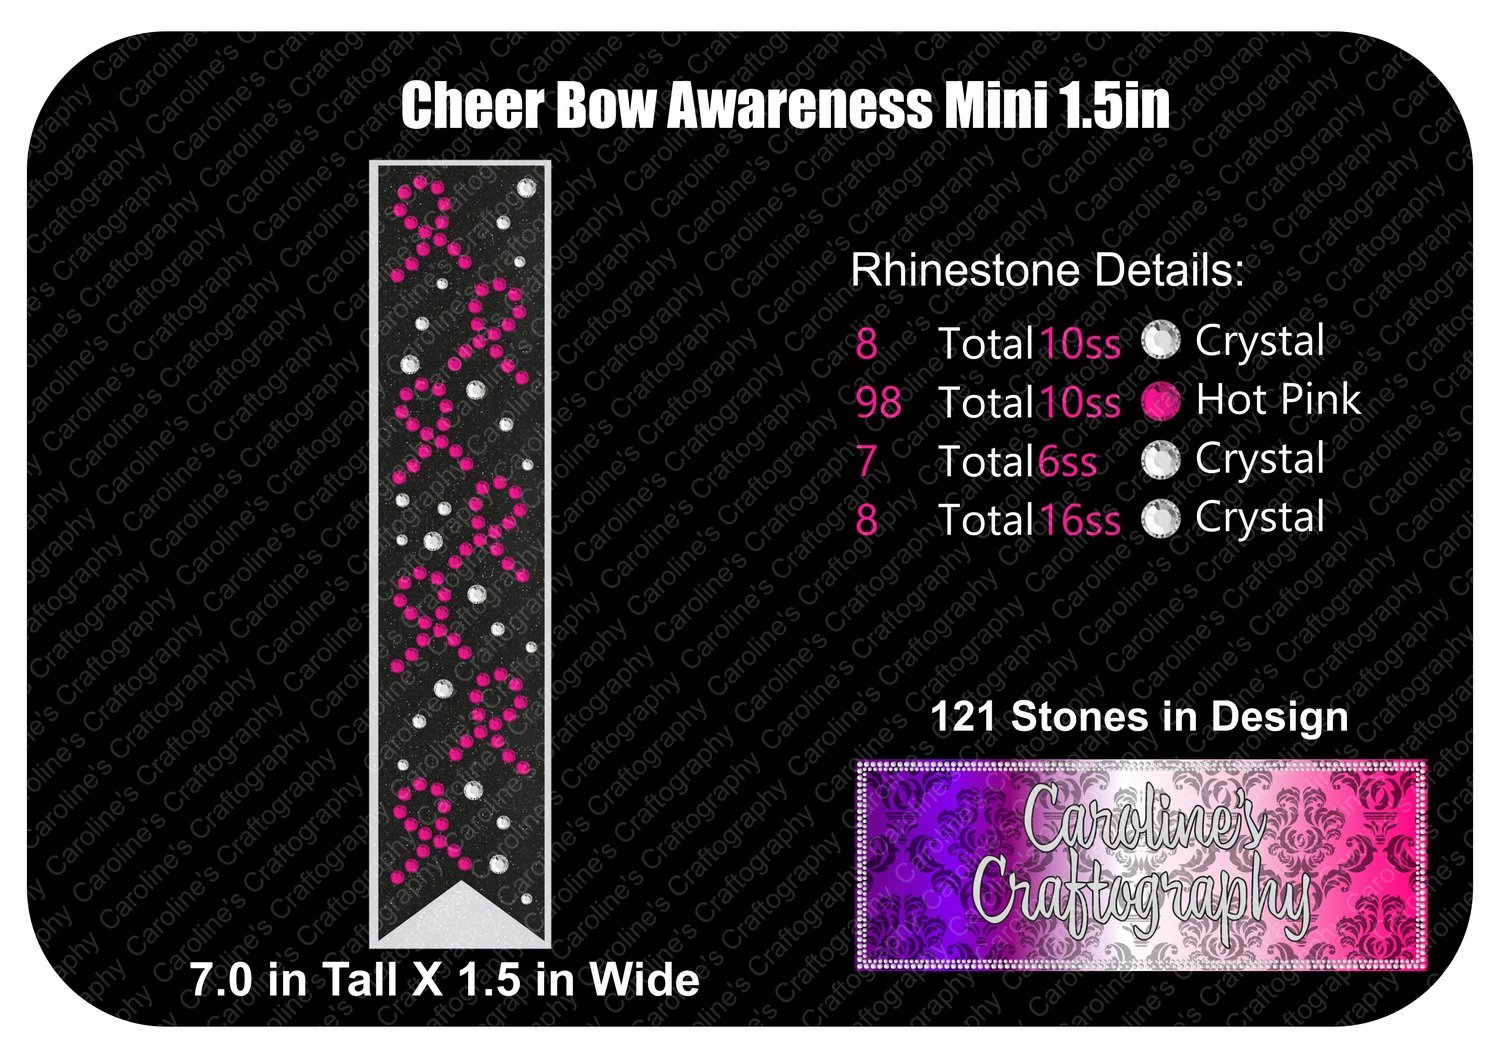 Awareness Ribbon 1.5in Mini Cheer Bow Stone